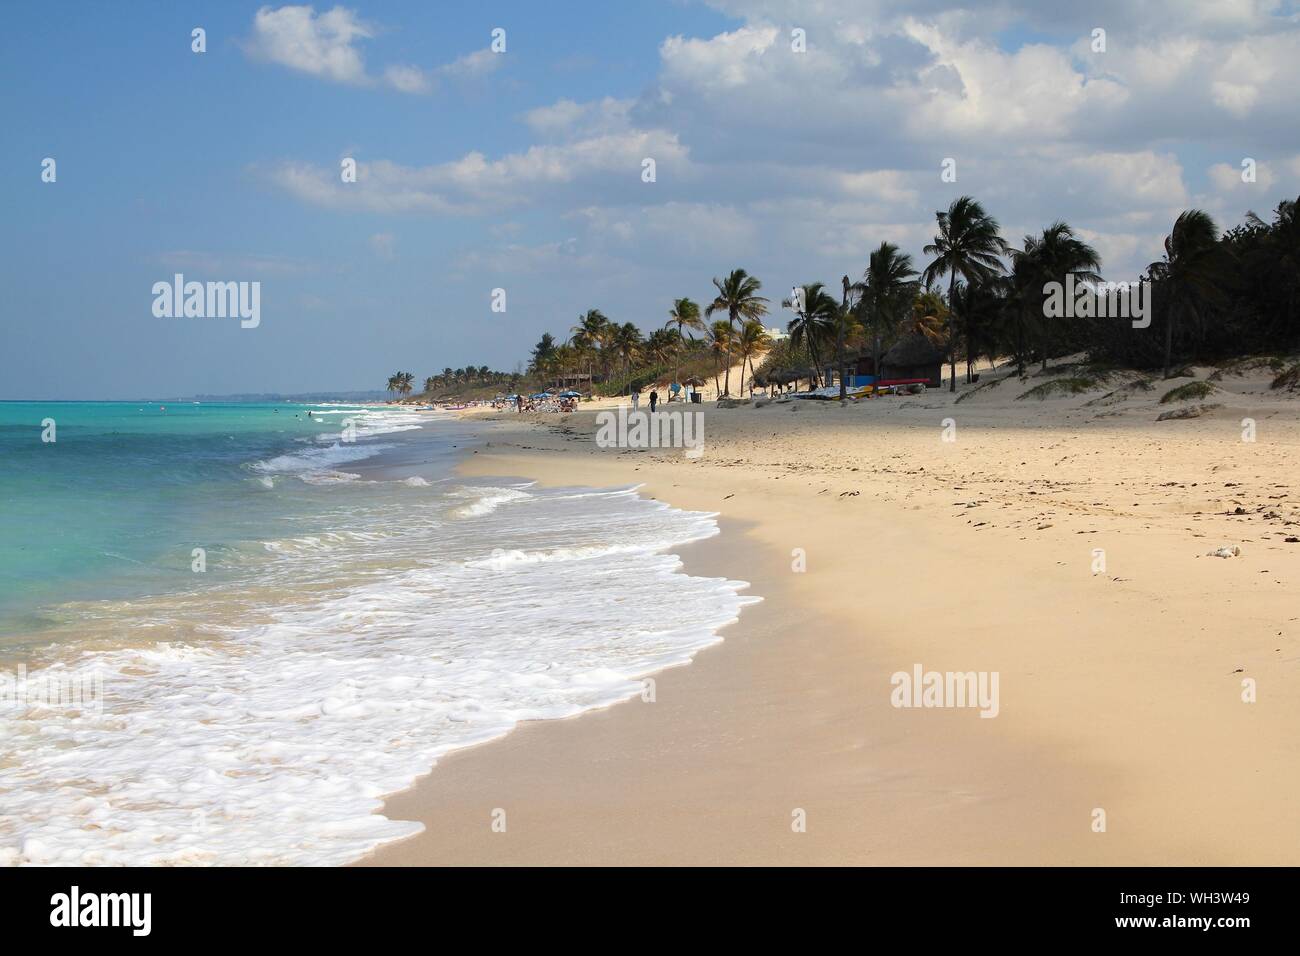 Cuba landscape. Caribbean beach Playa Megano in Playas del Este part of Havana Province. Stock Photo